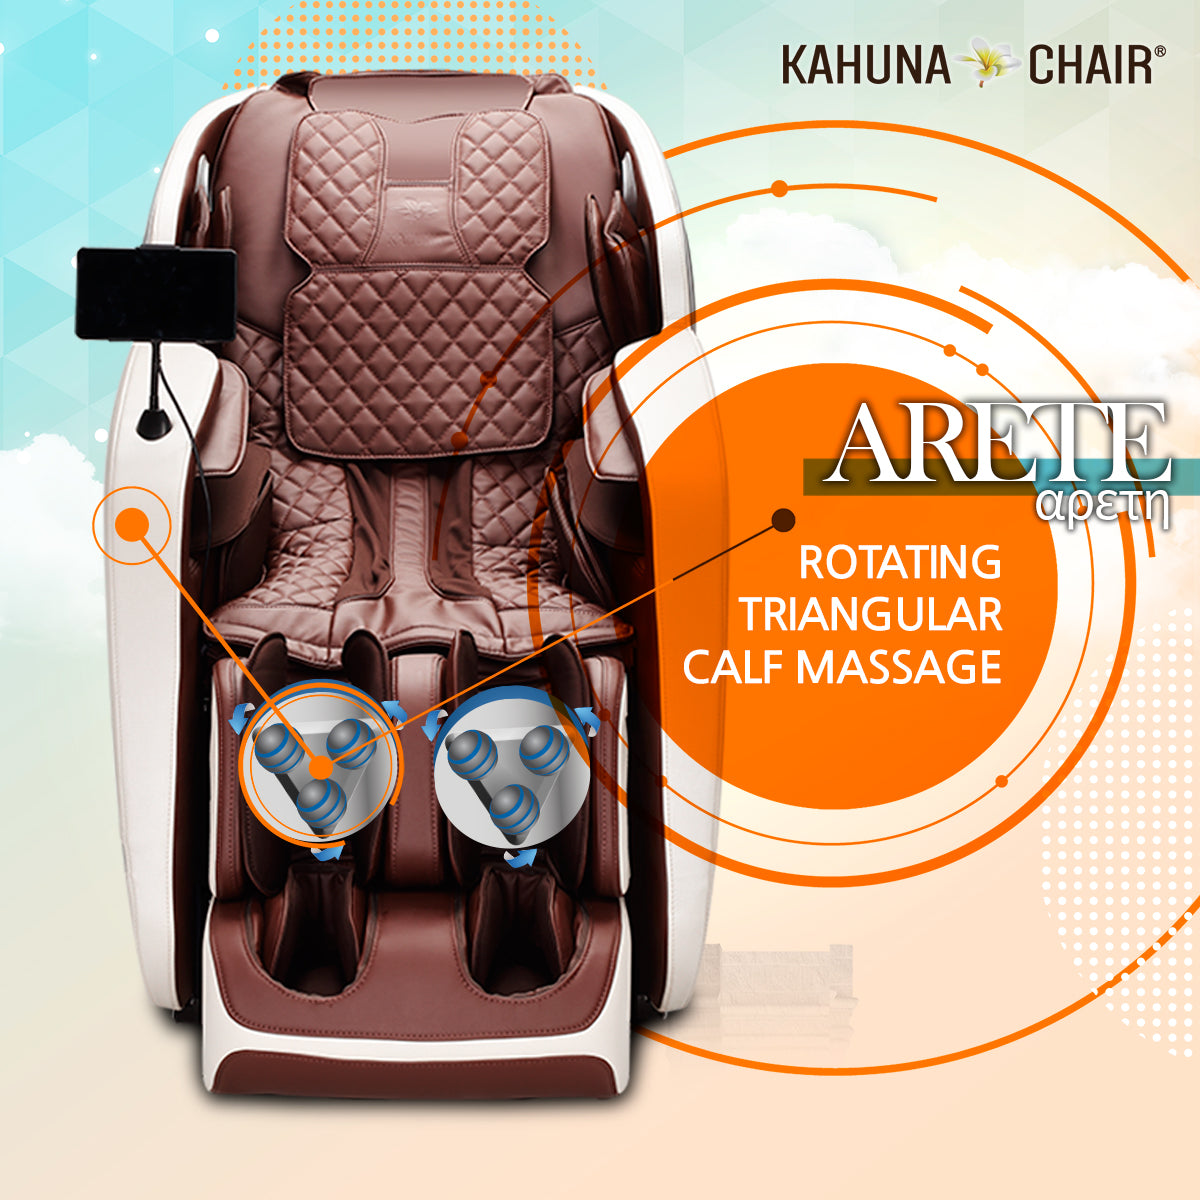 kahuna Em Arete Massage chair fully rotating triangular calf massage